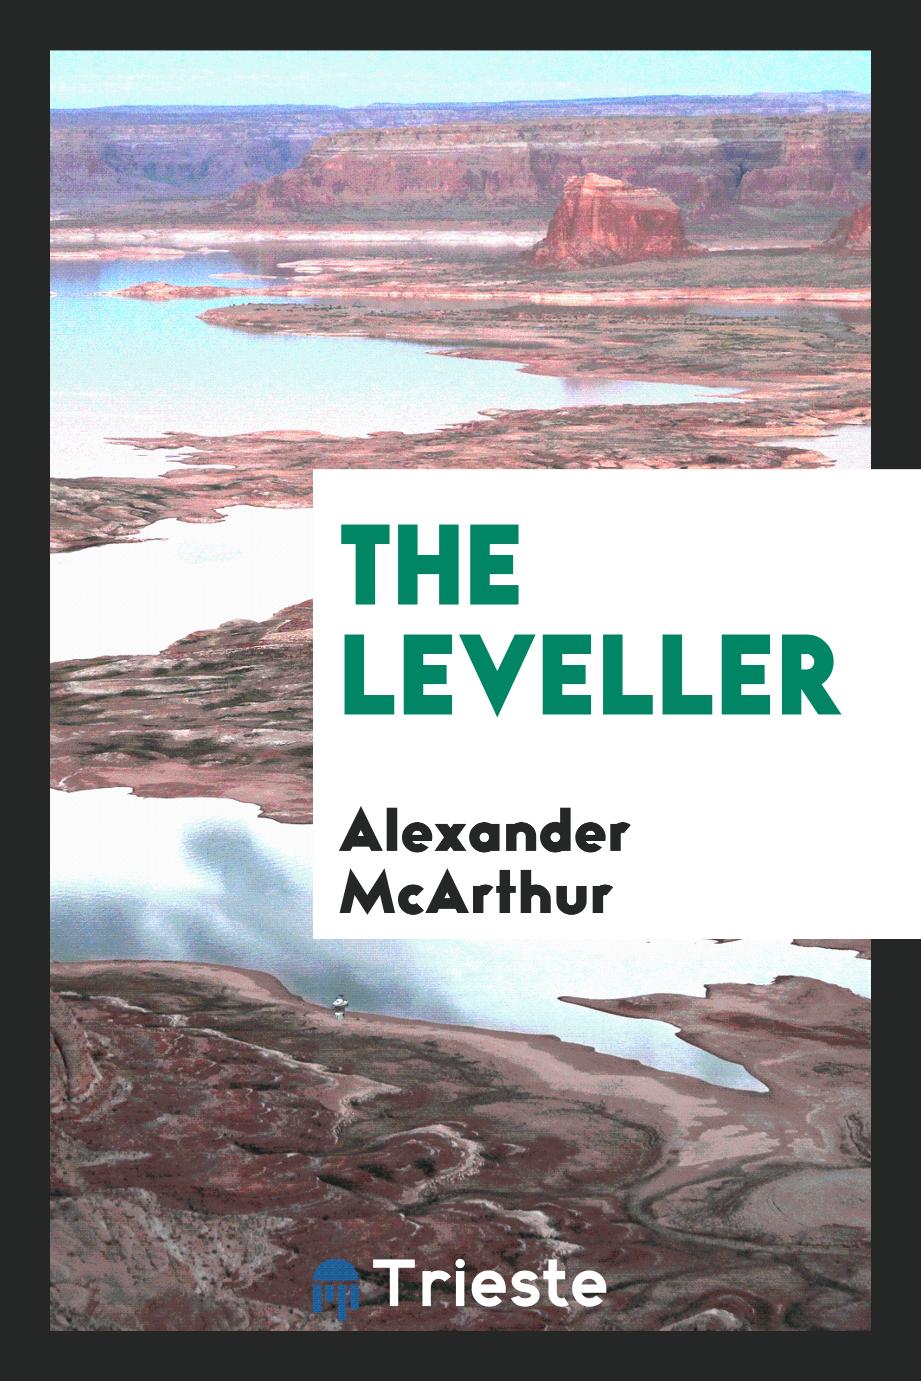 The leveller